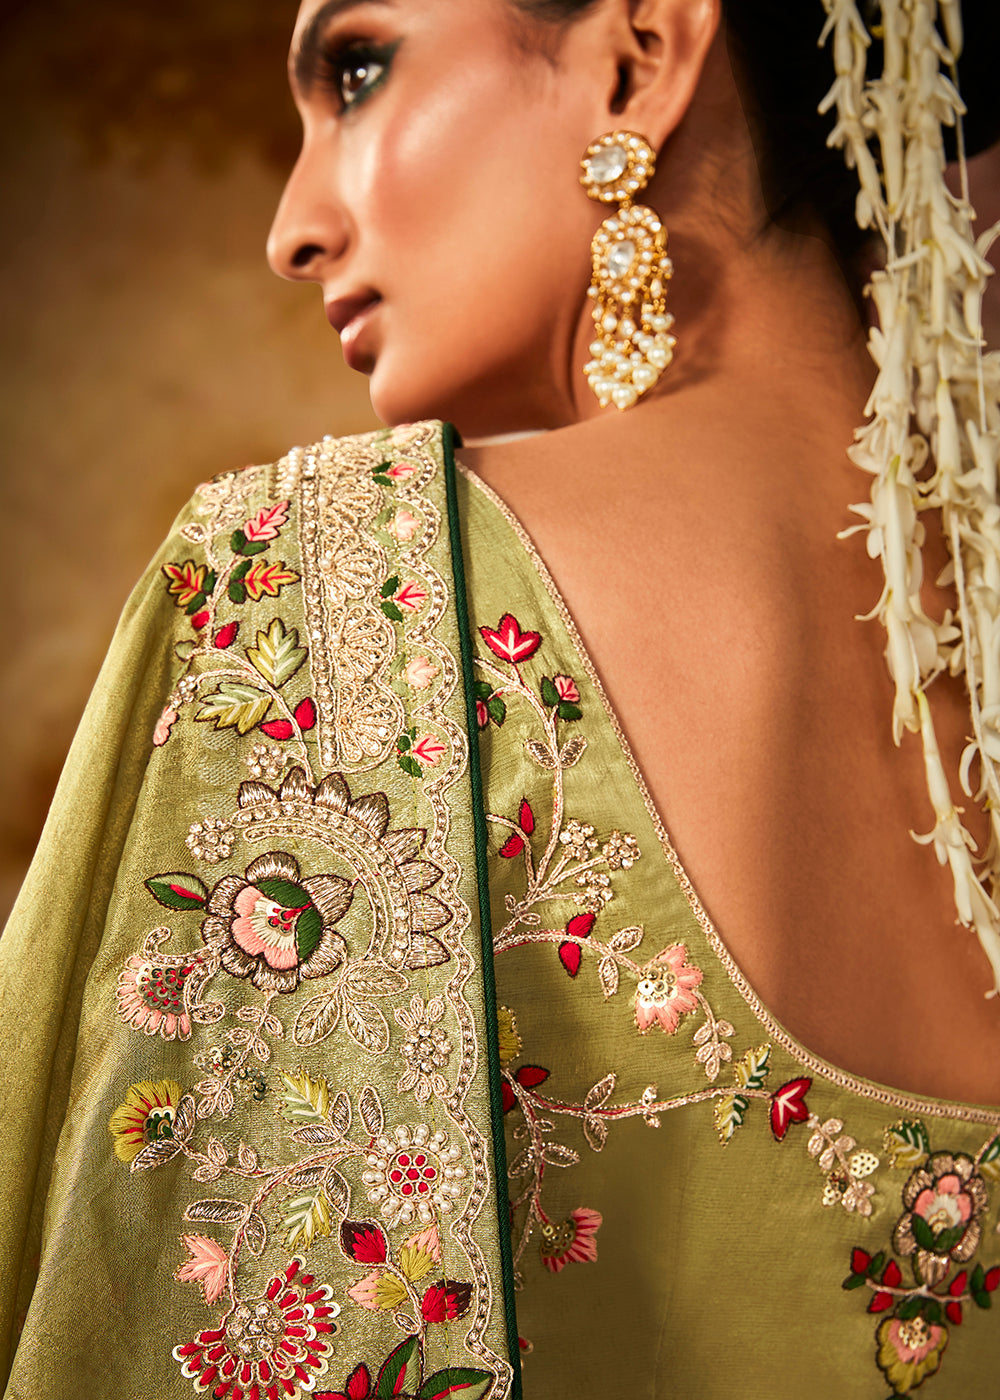 Buy Now Apple Green Wedding Wear Embroidered Kanjivaram Silk Saree Online in USA, UK, Canada & Worldwide at Empress Clothing. 